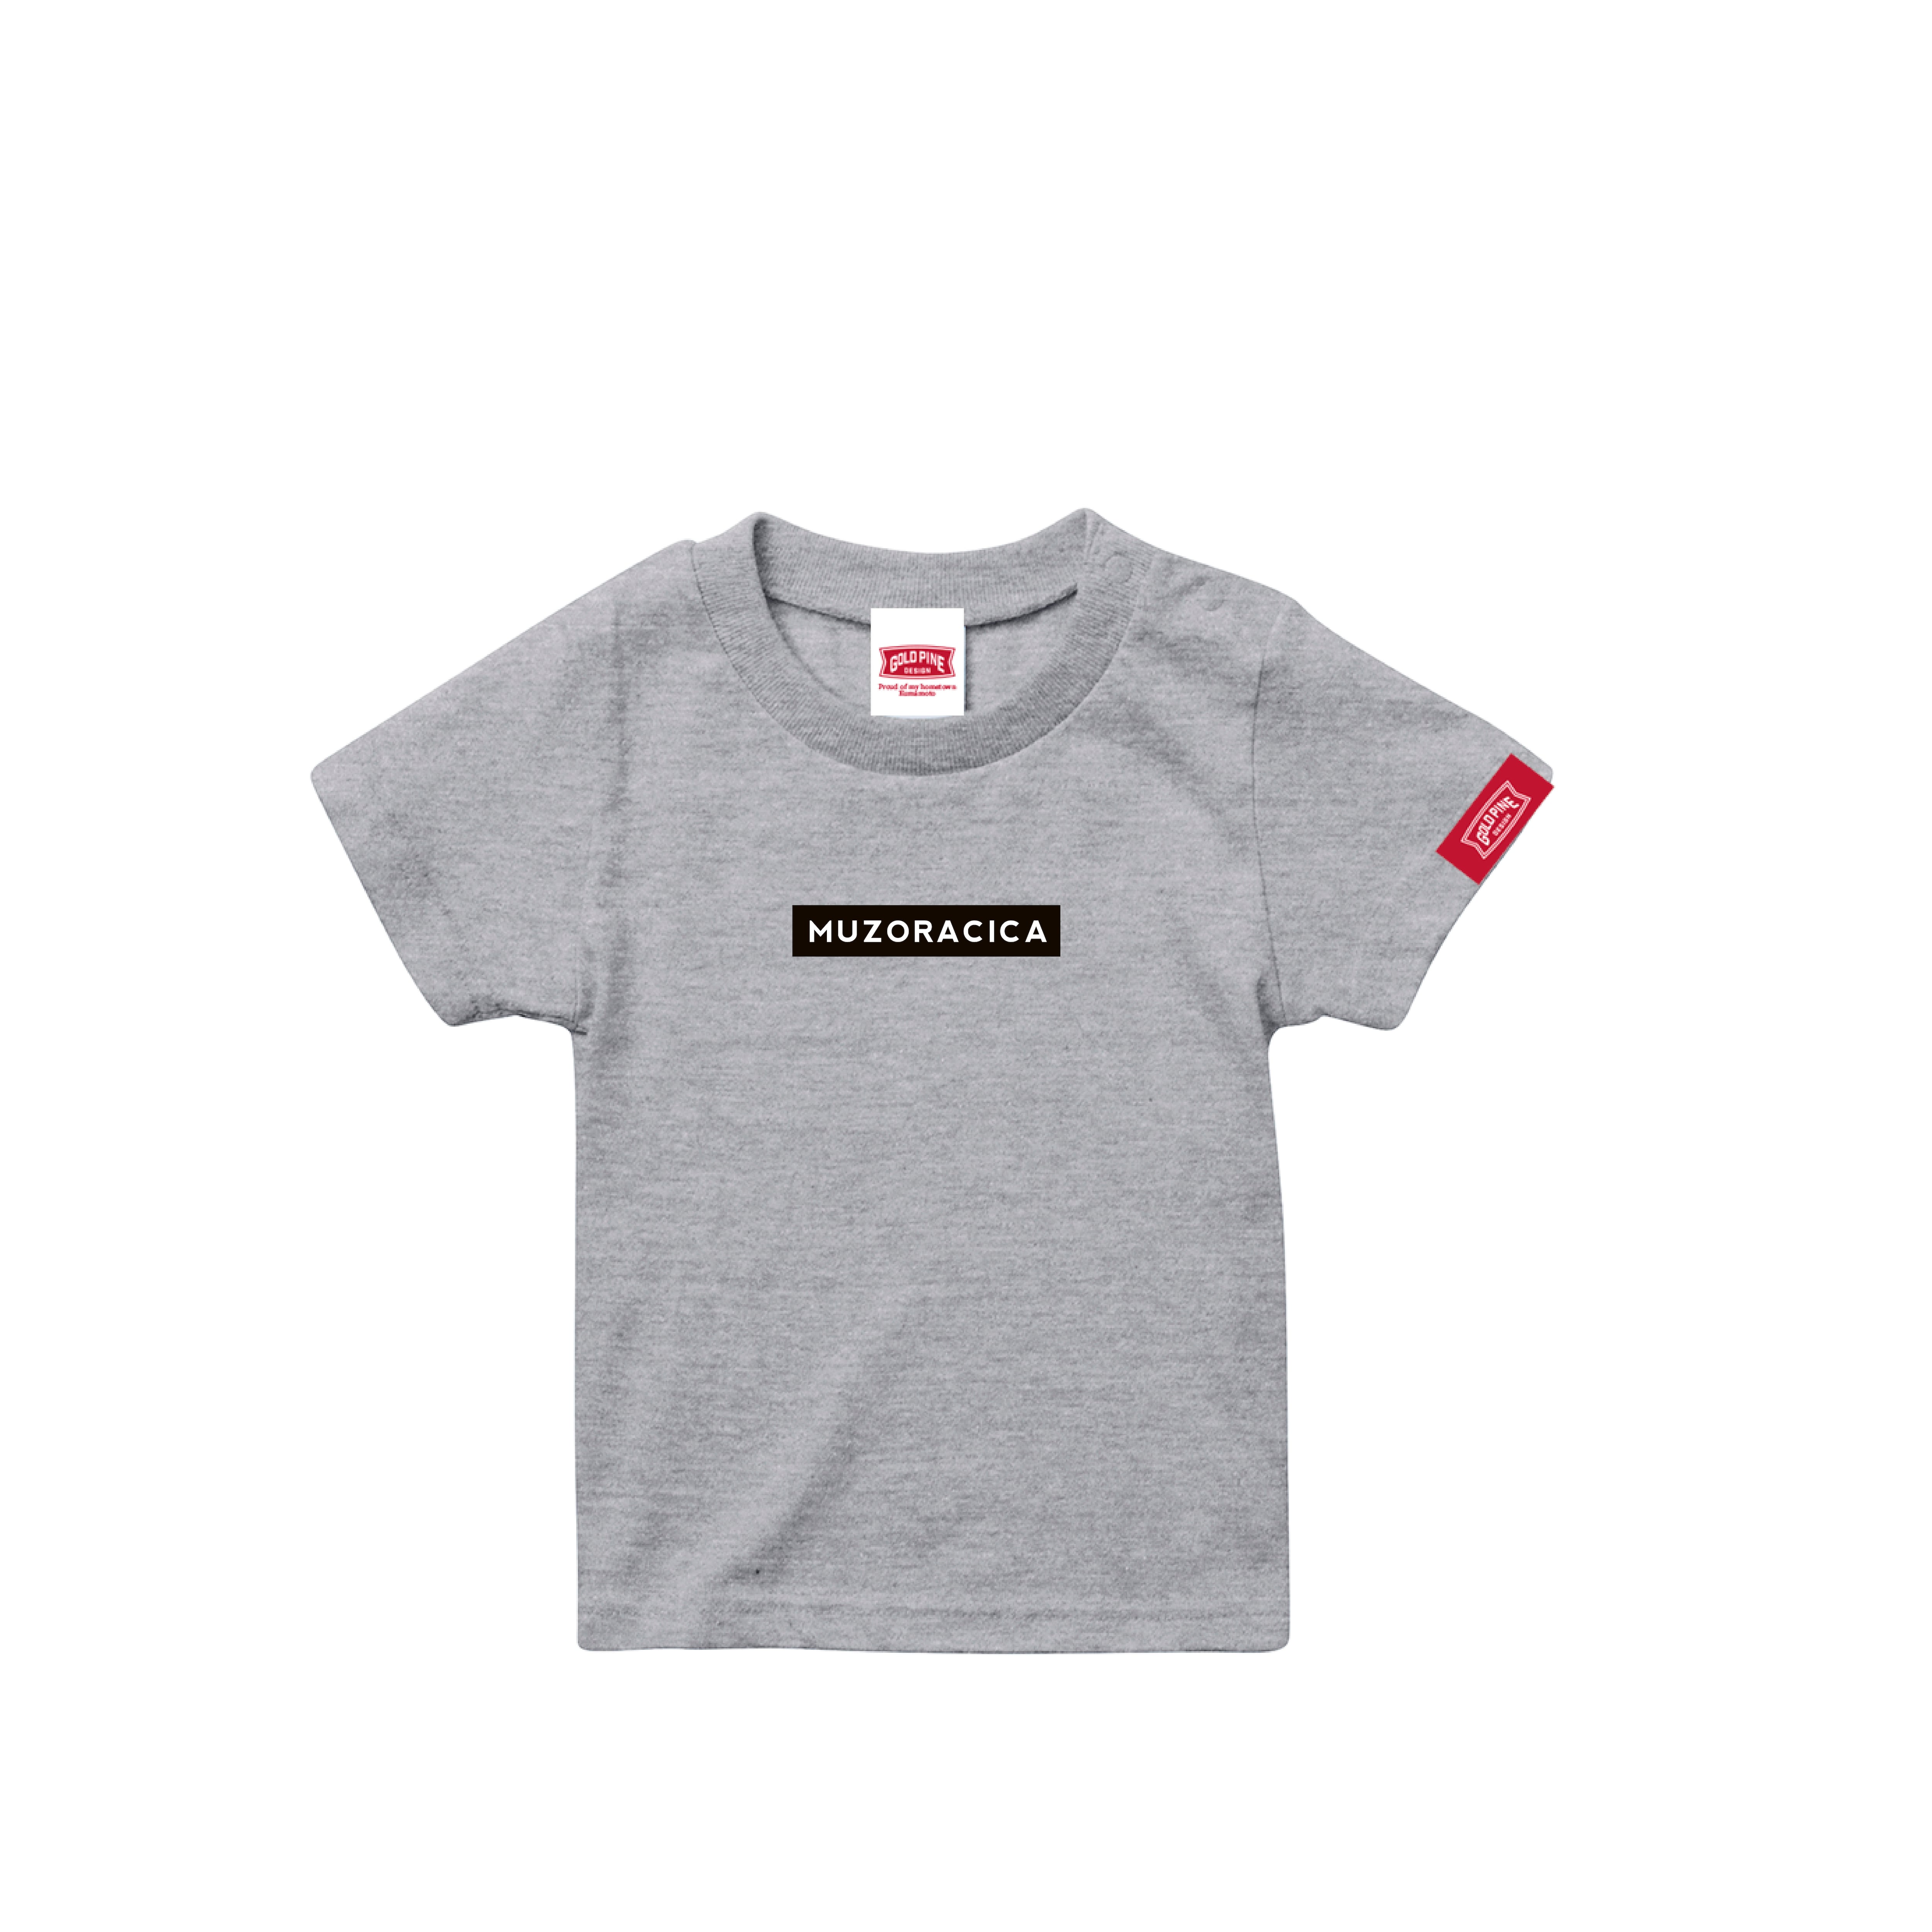 MUZORASHICA-Tshirt【Kids】Gray